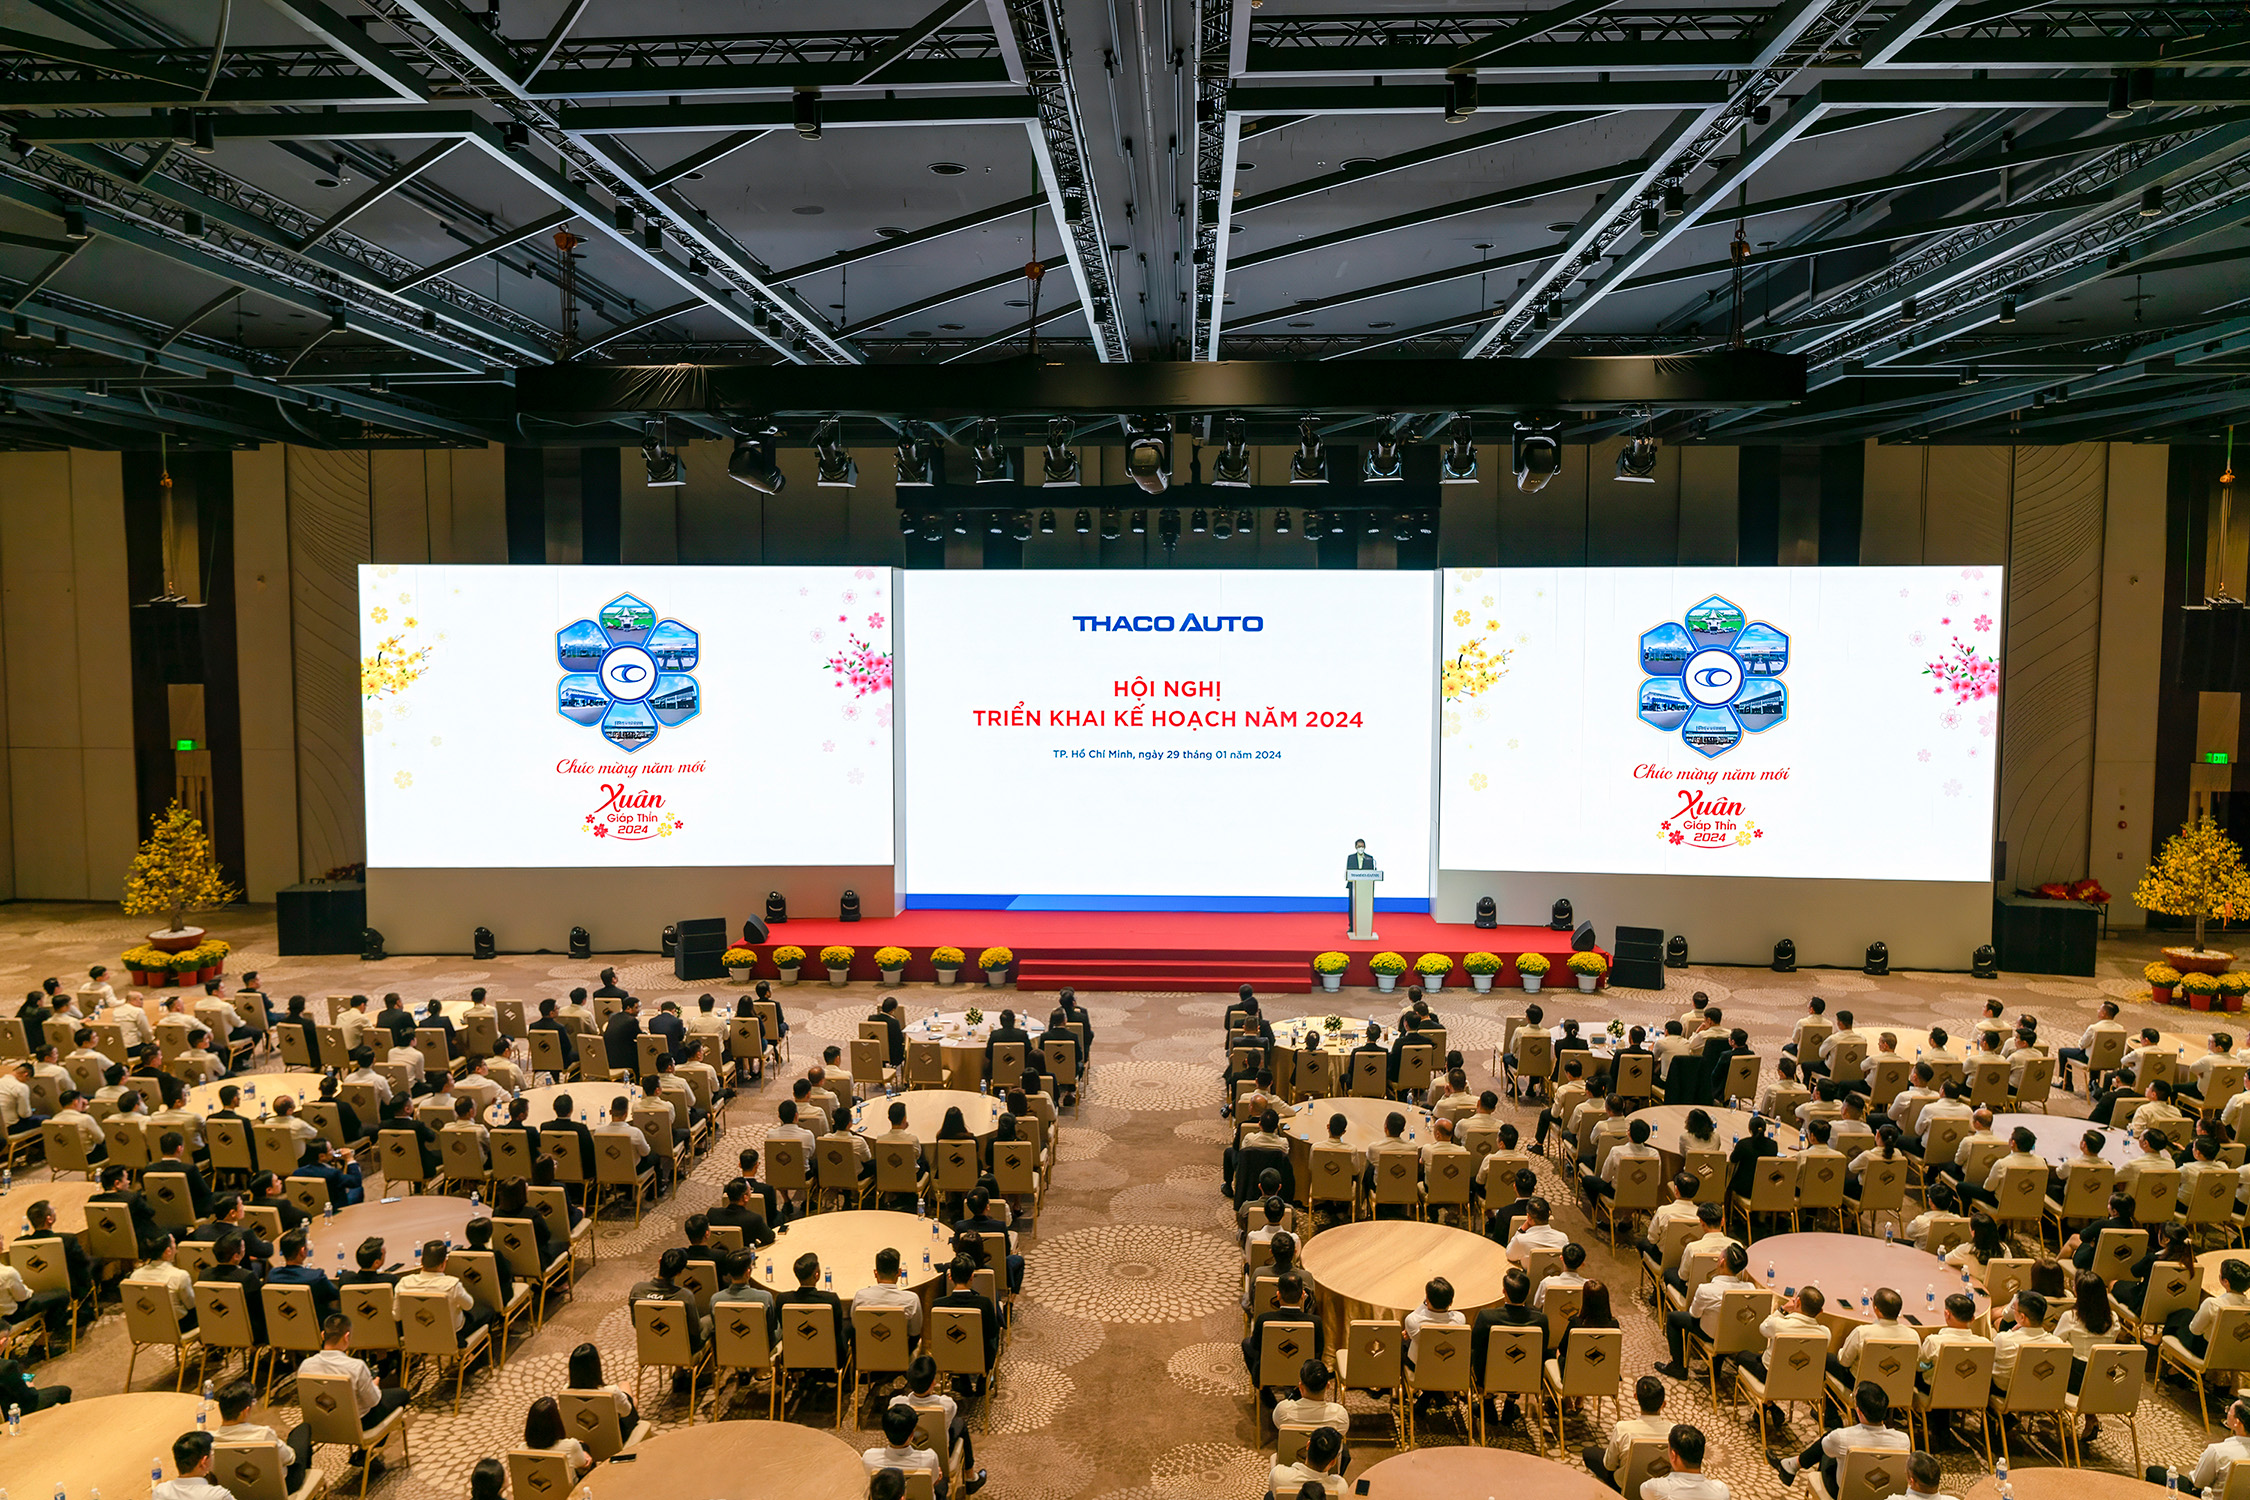 THACO AUTO tổ chức Hội nghị Triển khai kế hoạch năm 2024